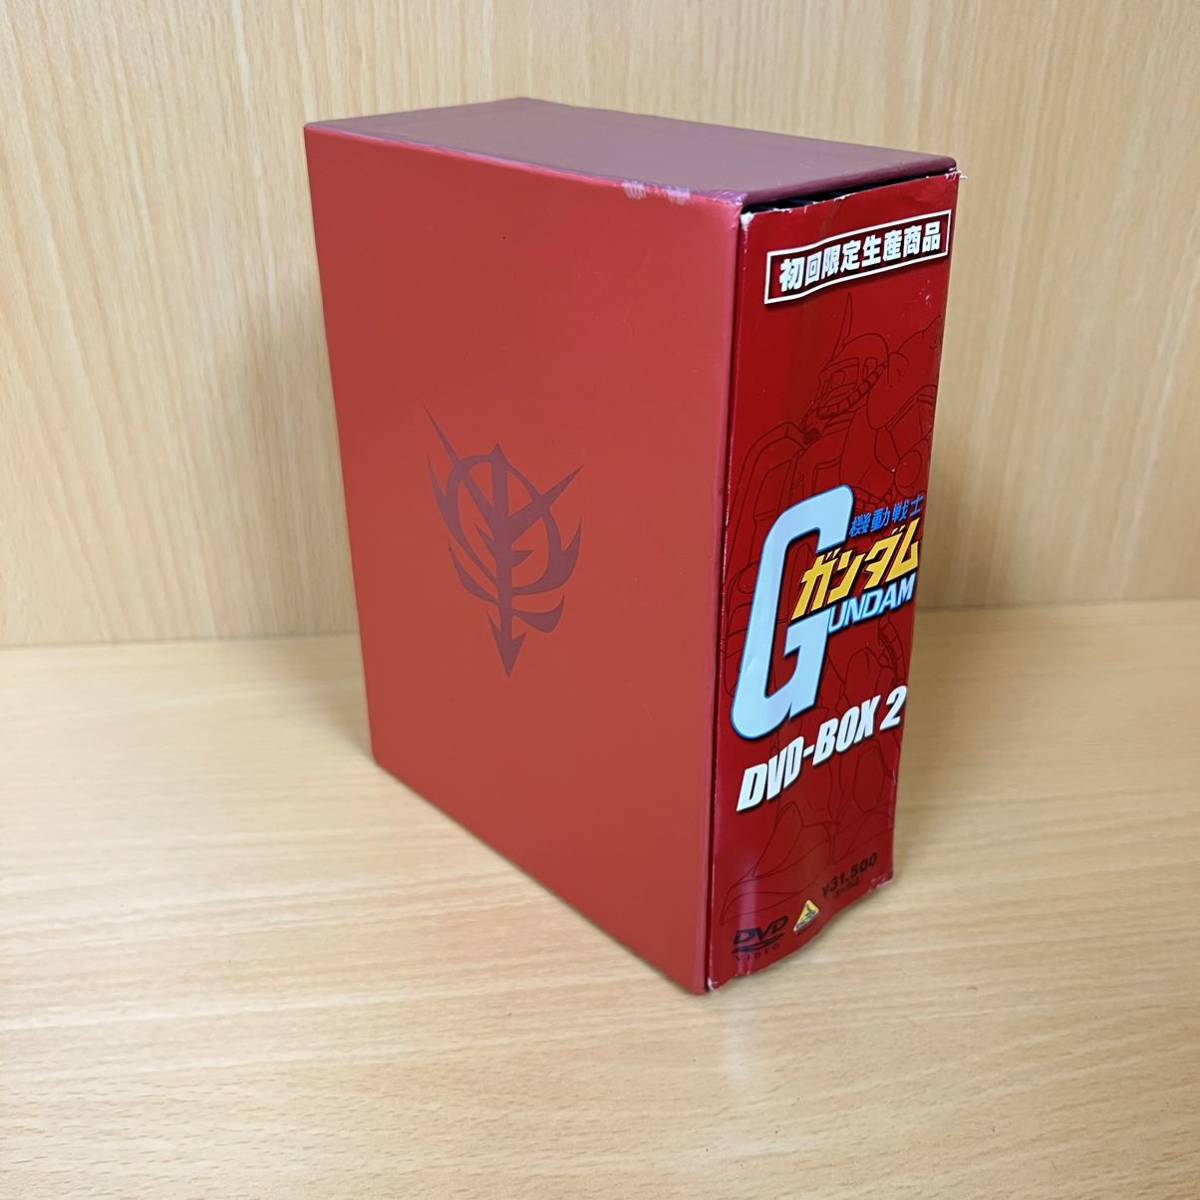 機動戦士ガンダム 初回限定生産 DVD-BOX 2 _画像3